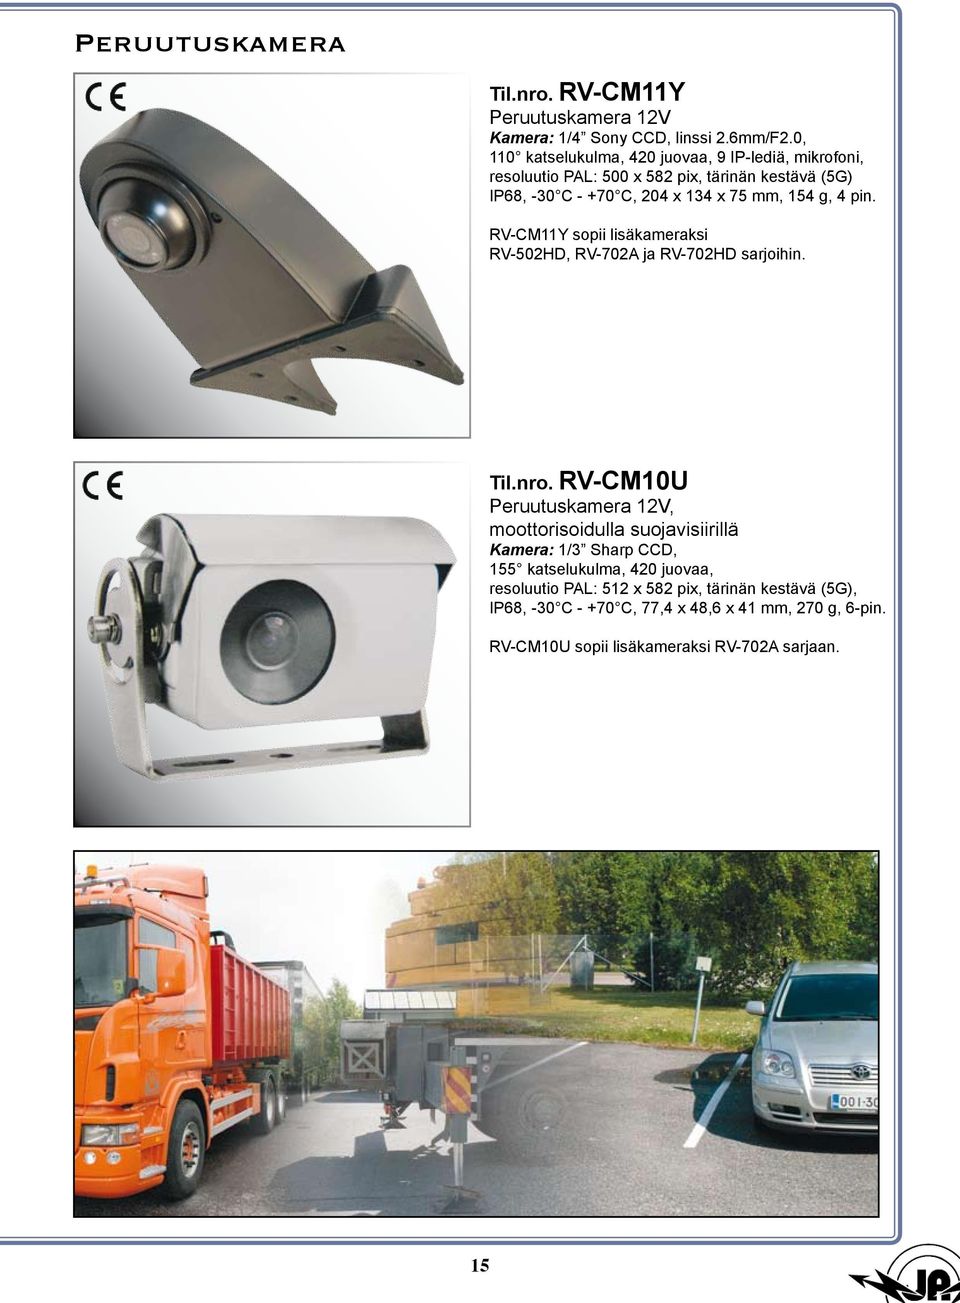 154 g, 4 pin. RV-CM11Y sopii lisäkameraksi RV-502HD, RV-702A ja RV-702HD sarjoihin. Til.nro.